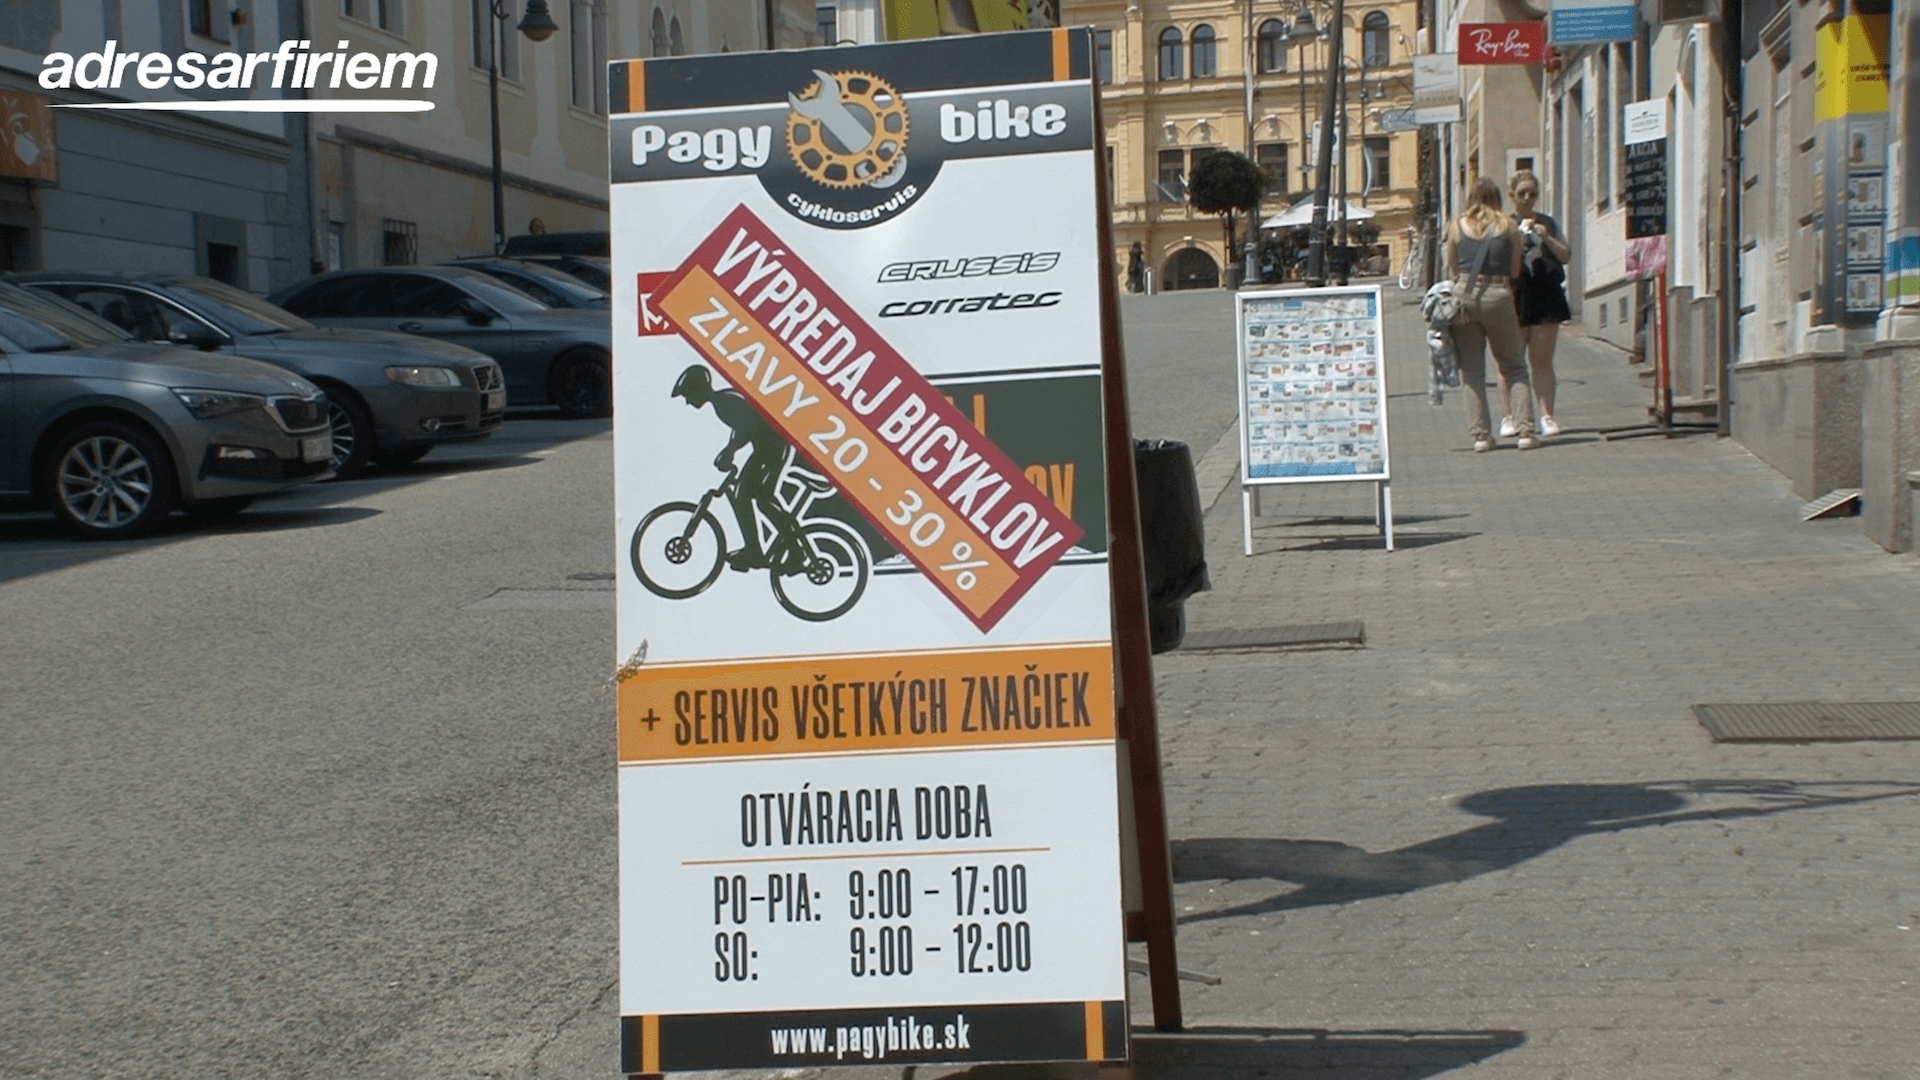 Video Pagy-bikebb.sk Banská Bystrica